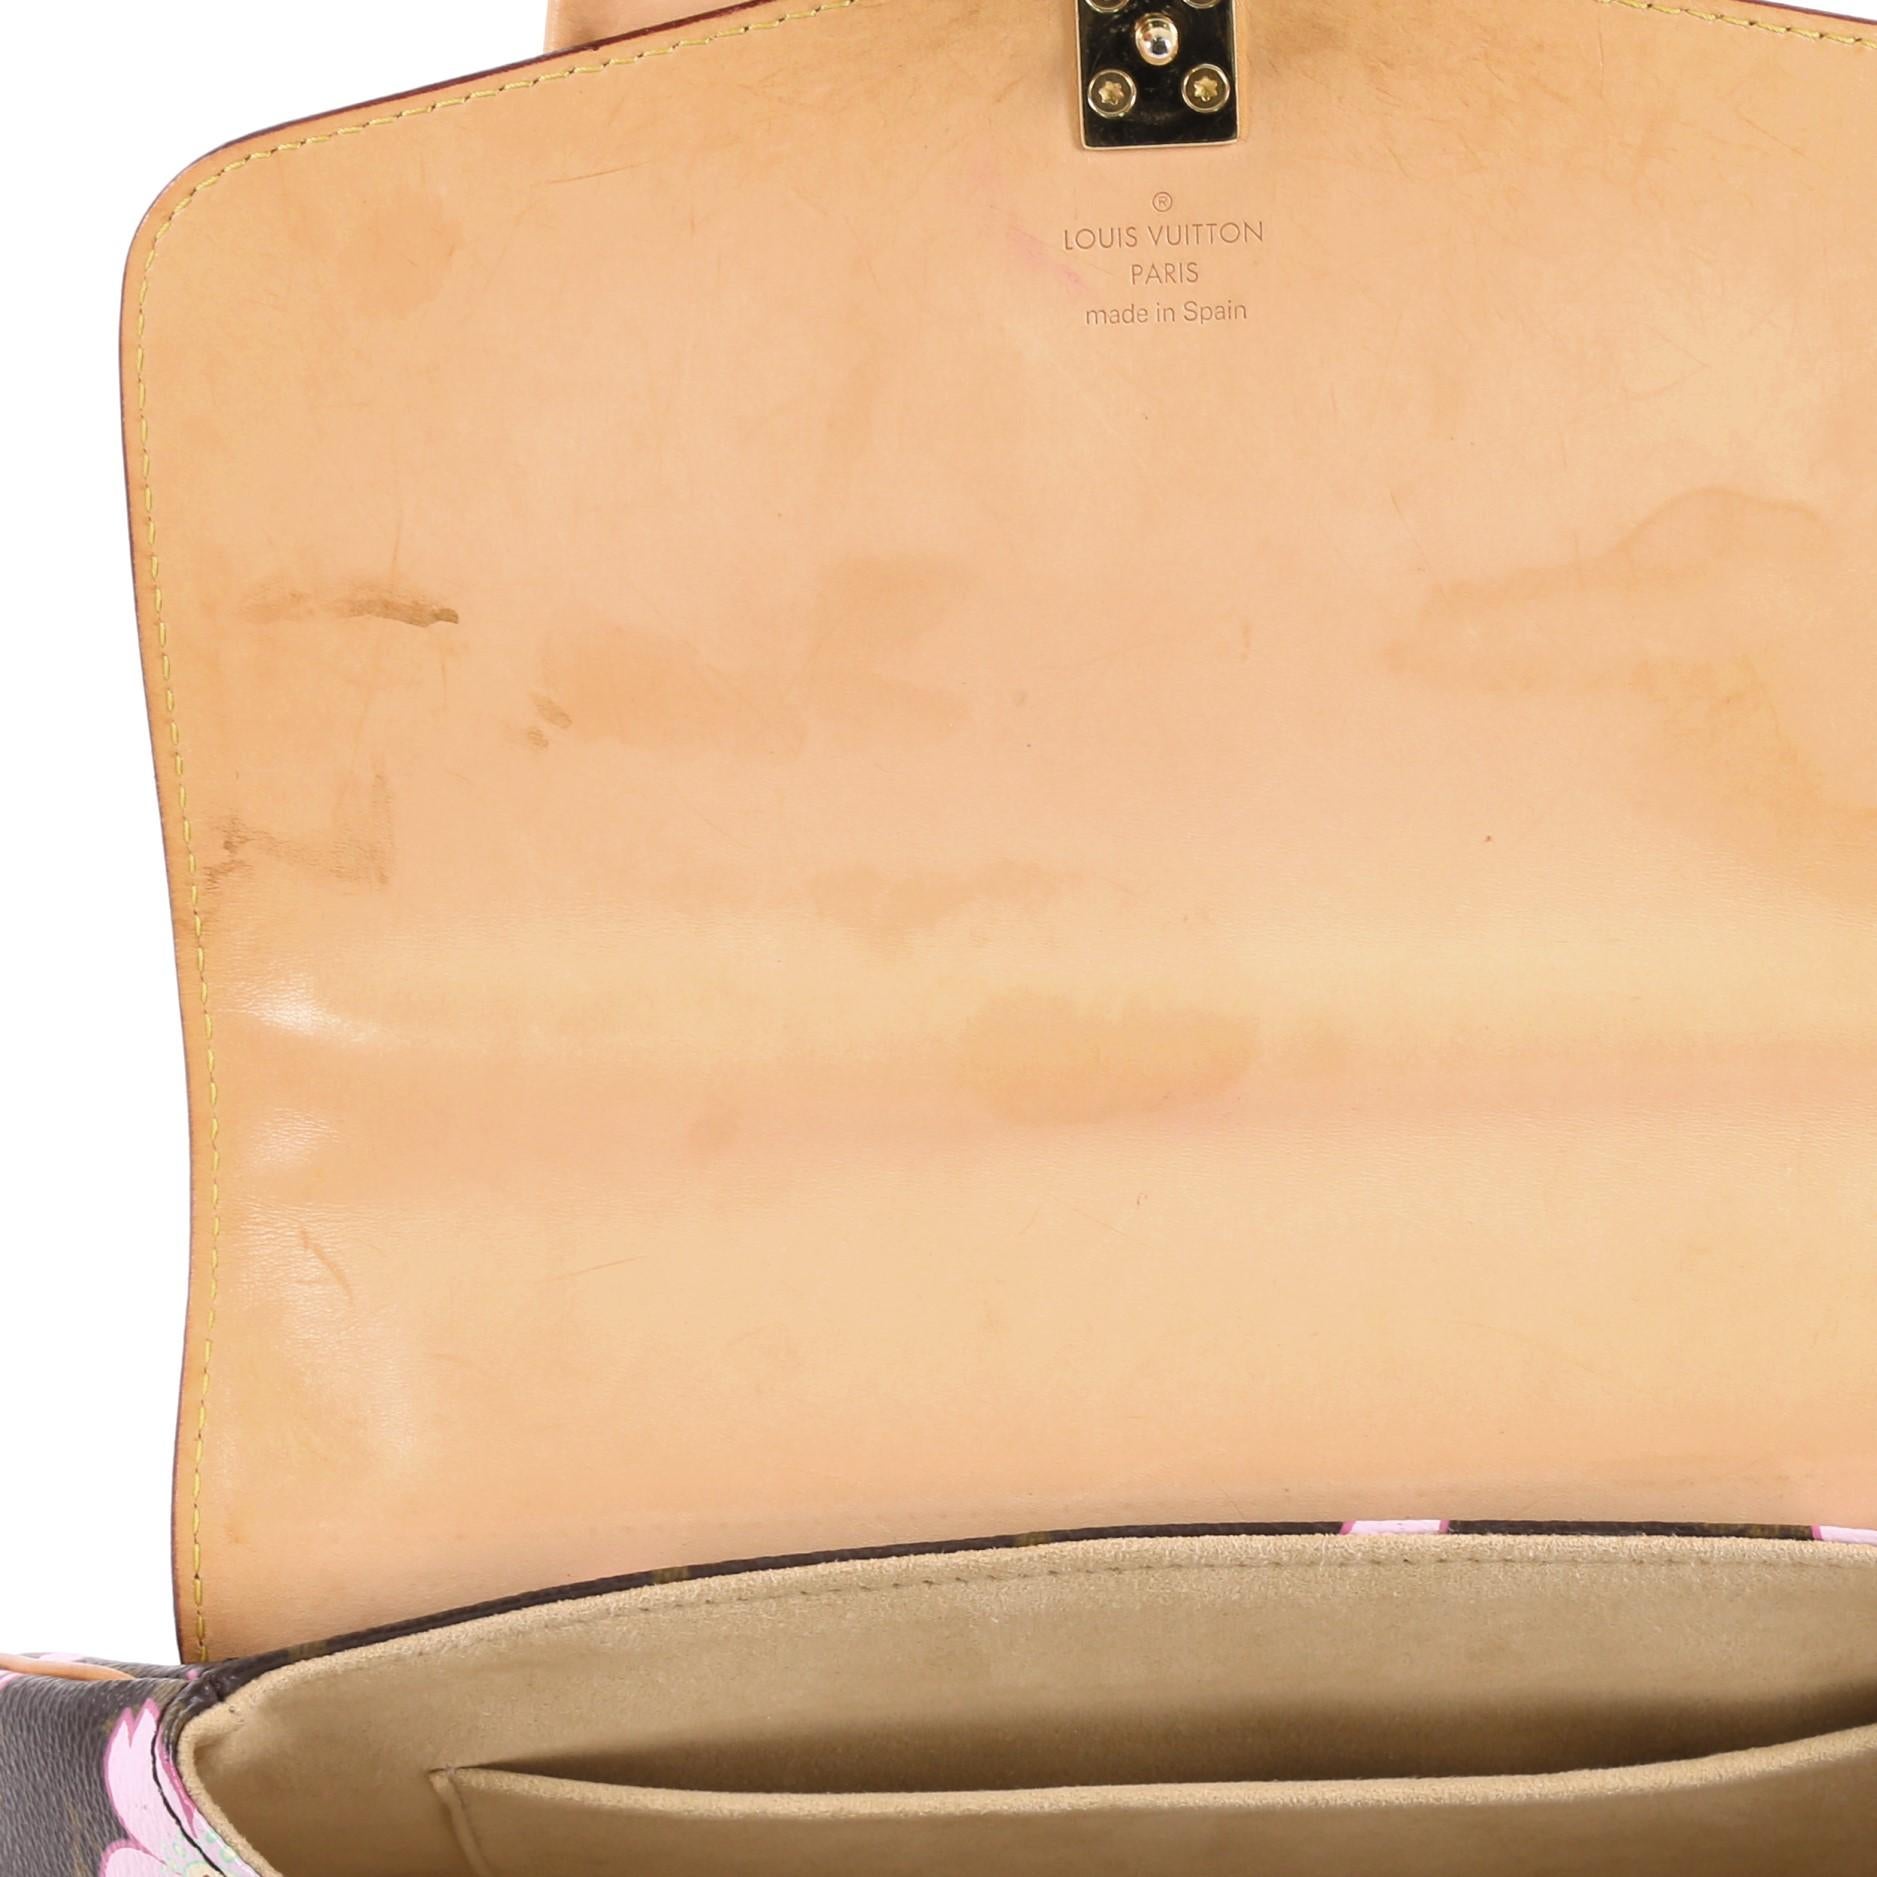 Louis Vuitton Retro Bag Limited Edition Cherry Blossom 2